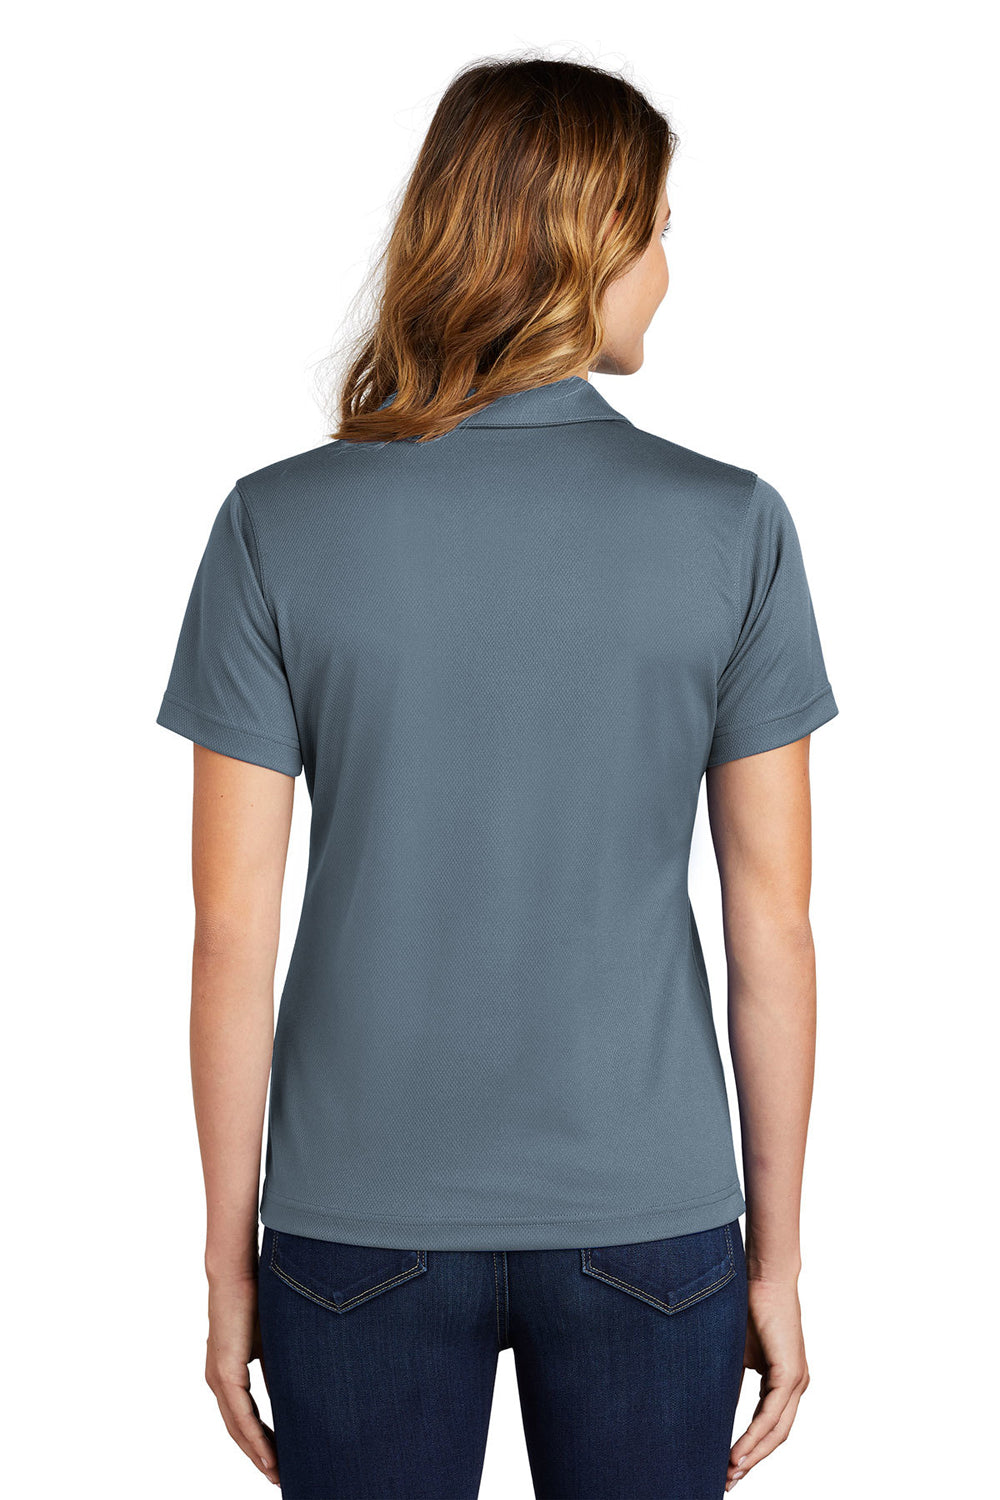 Sport-Tek L469 Womens Dri-Mesh Moisture Wicking Short Sleeve Polo Shirt Steel Grey Back